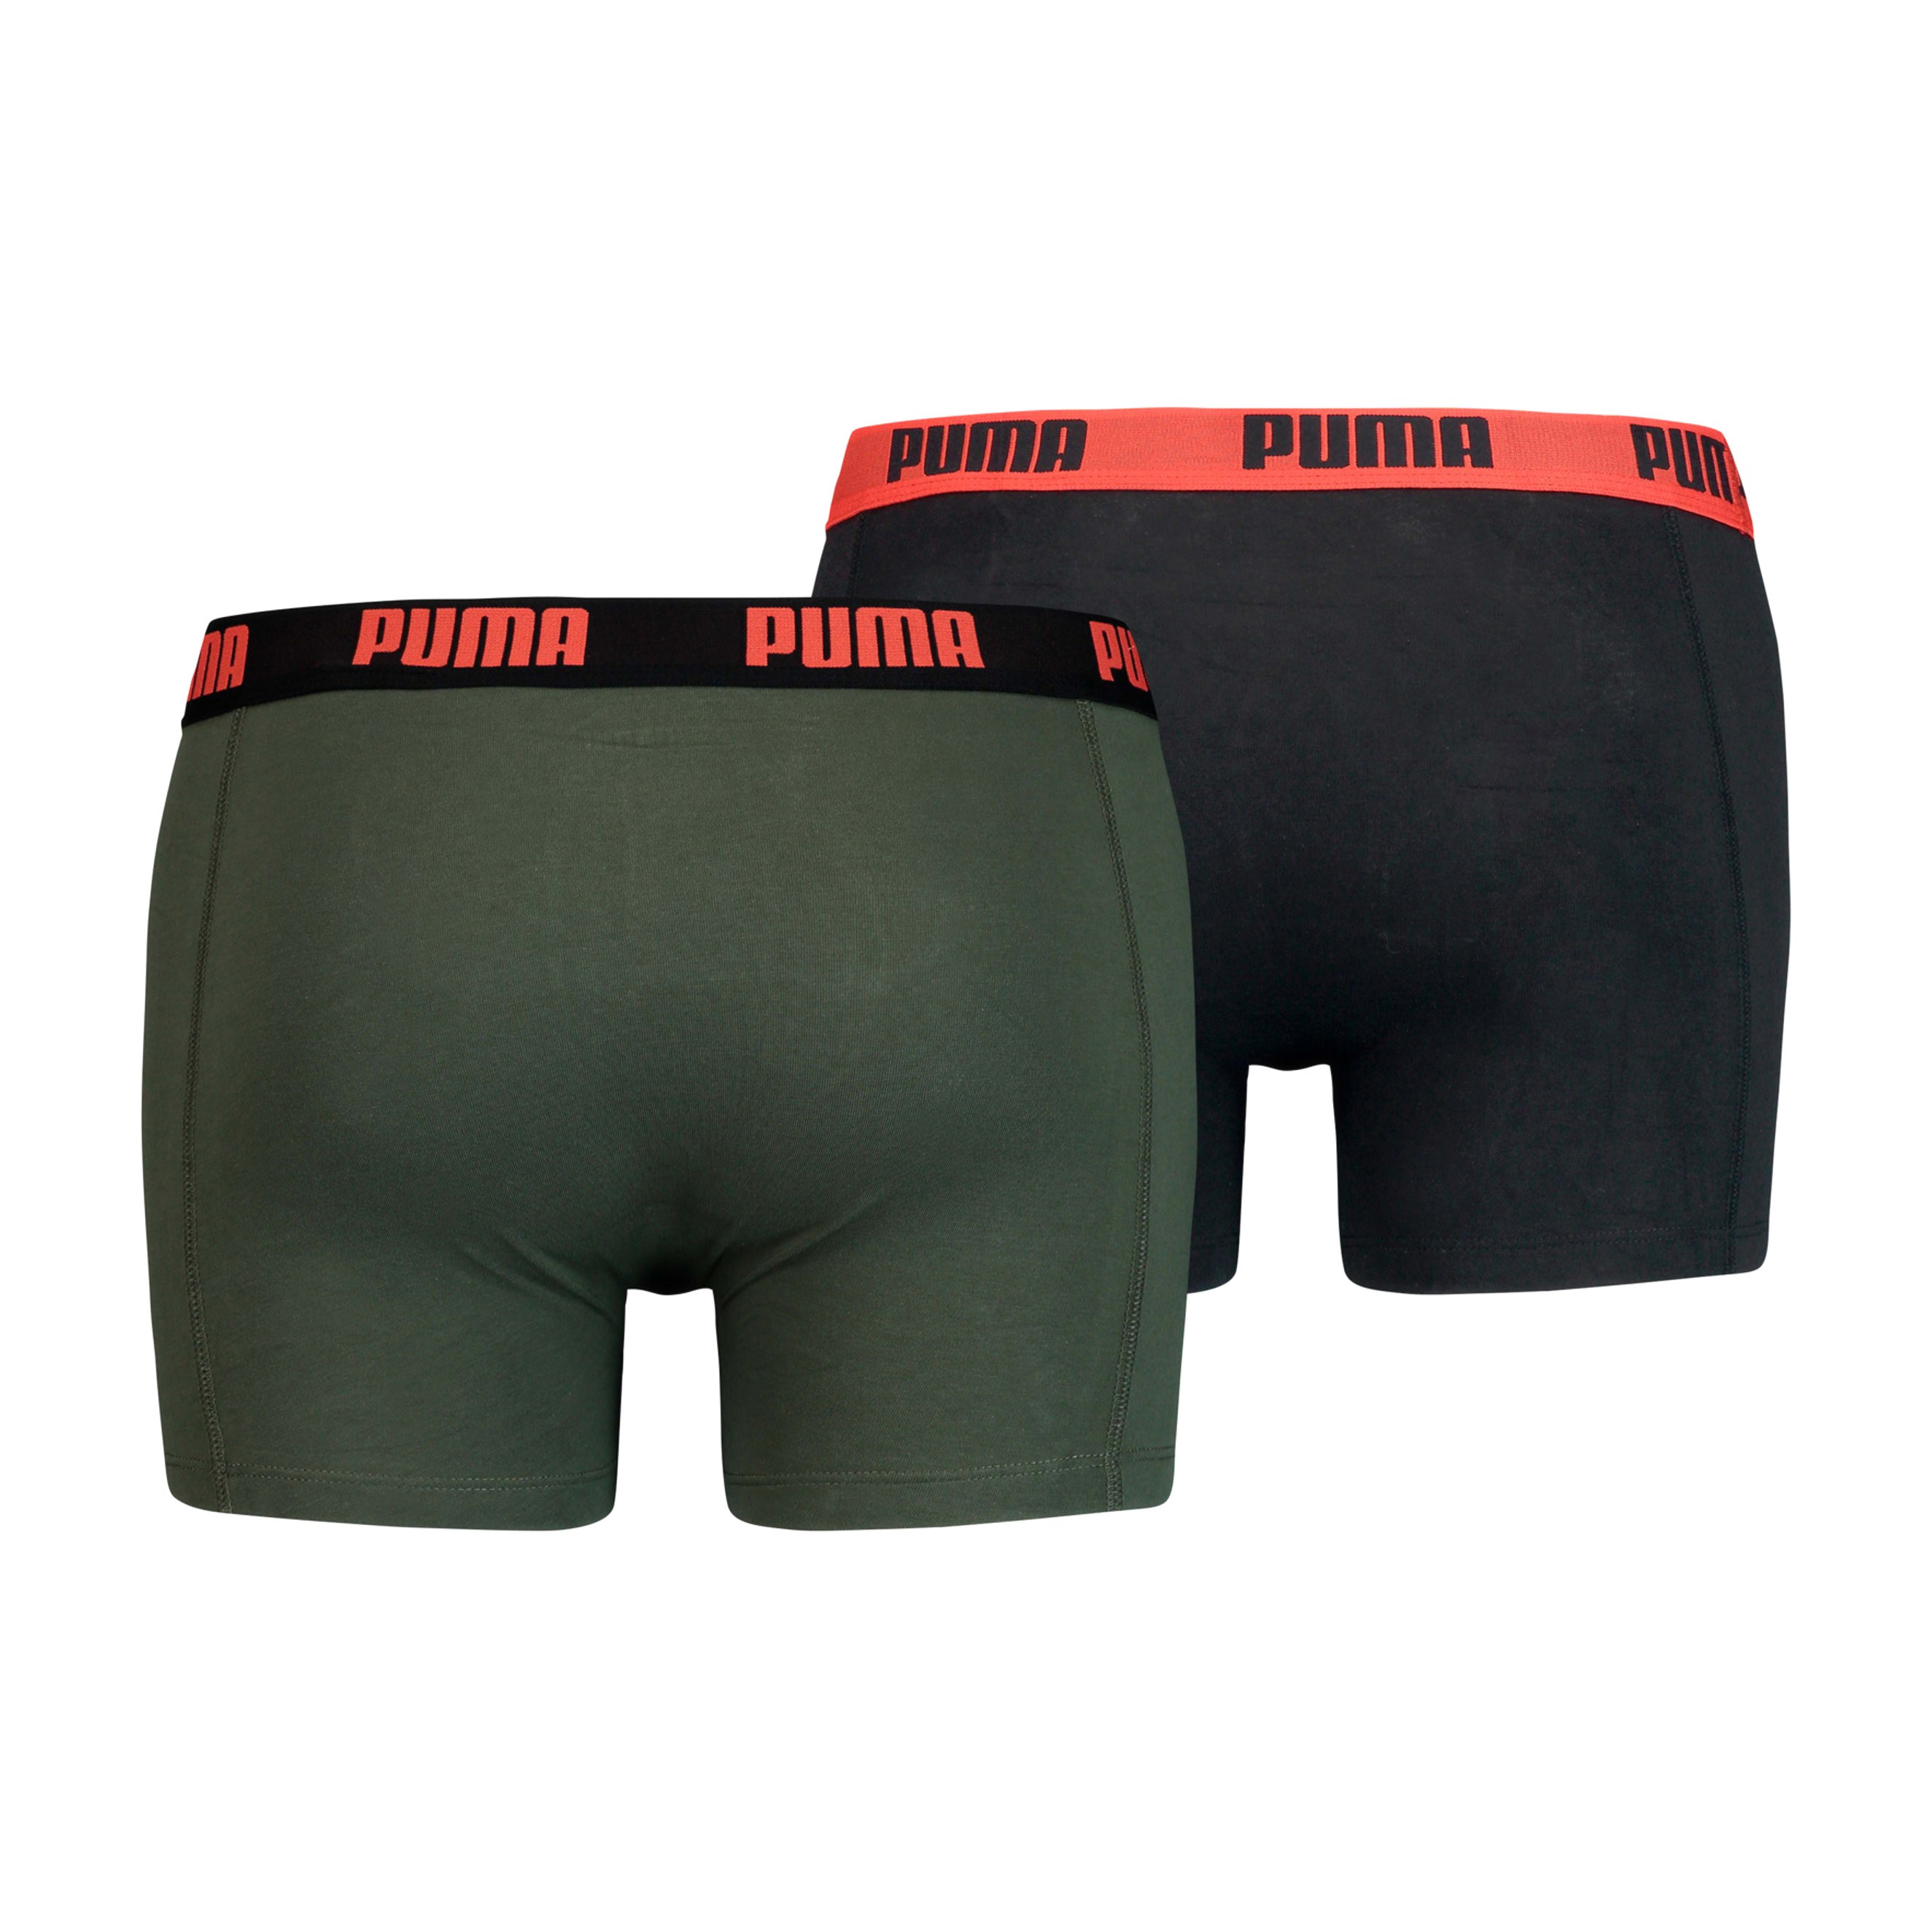 Vernederen abortus Goedkeuring Basic Boxer Shorts 2 Pack - army green: Packs for man brand Puma fo...